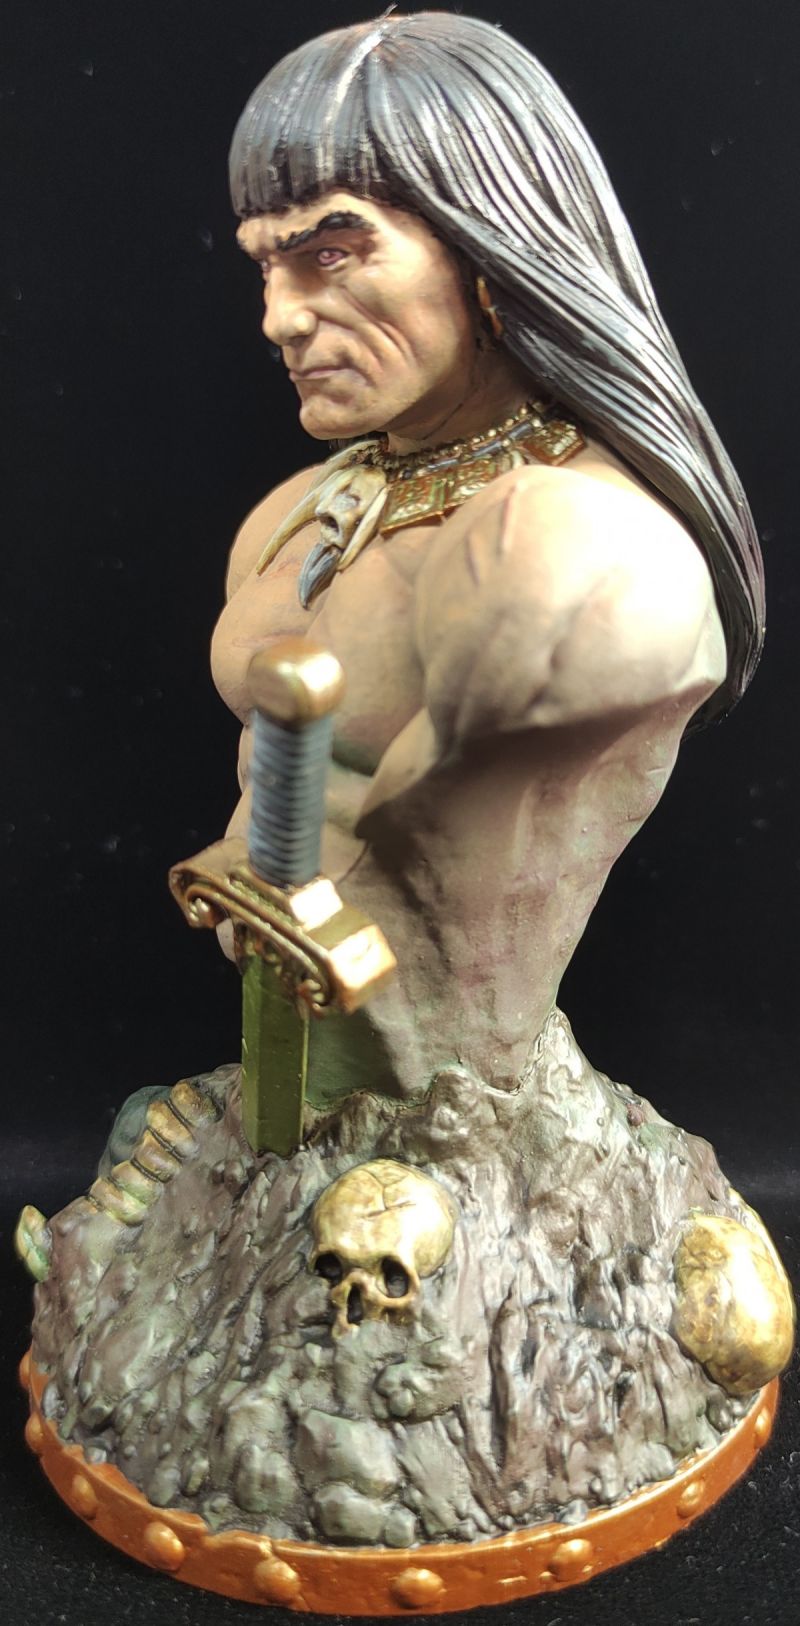 Conan bust